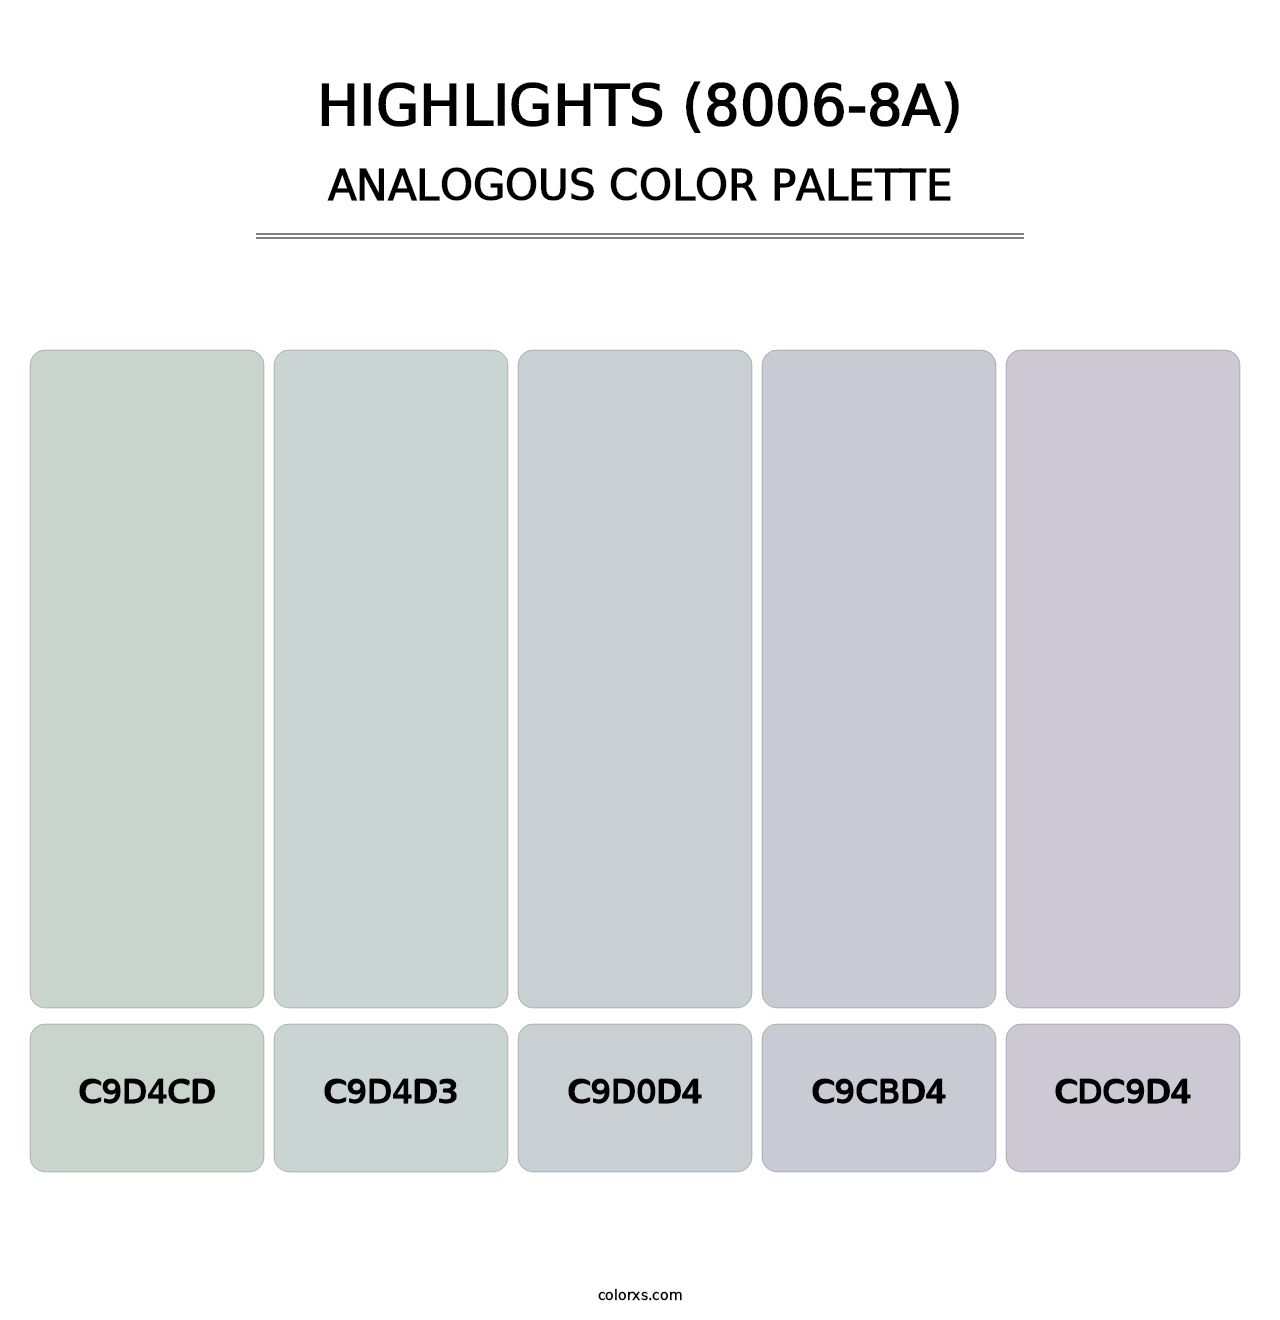 Highlights (8006-8A) - Analogous Color Palette